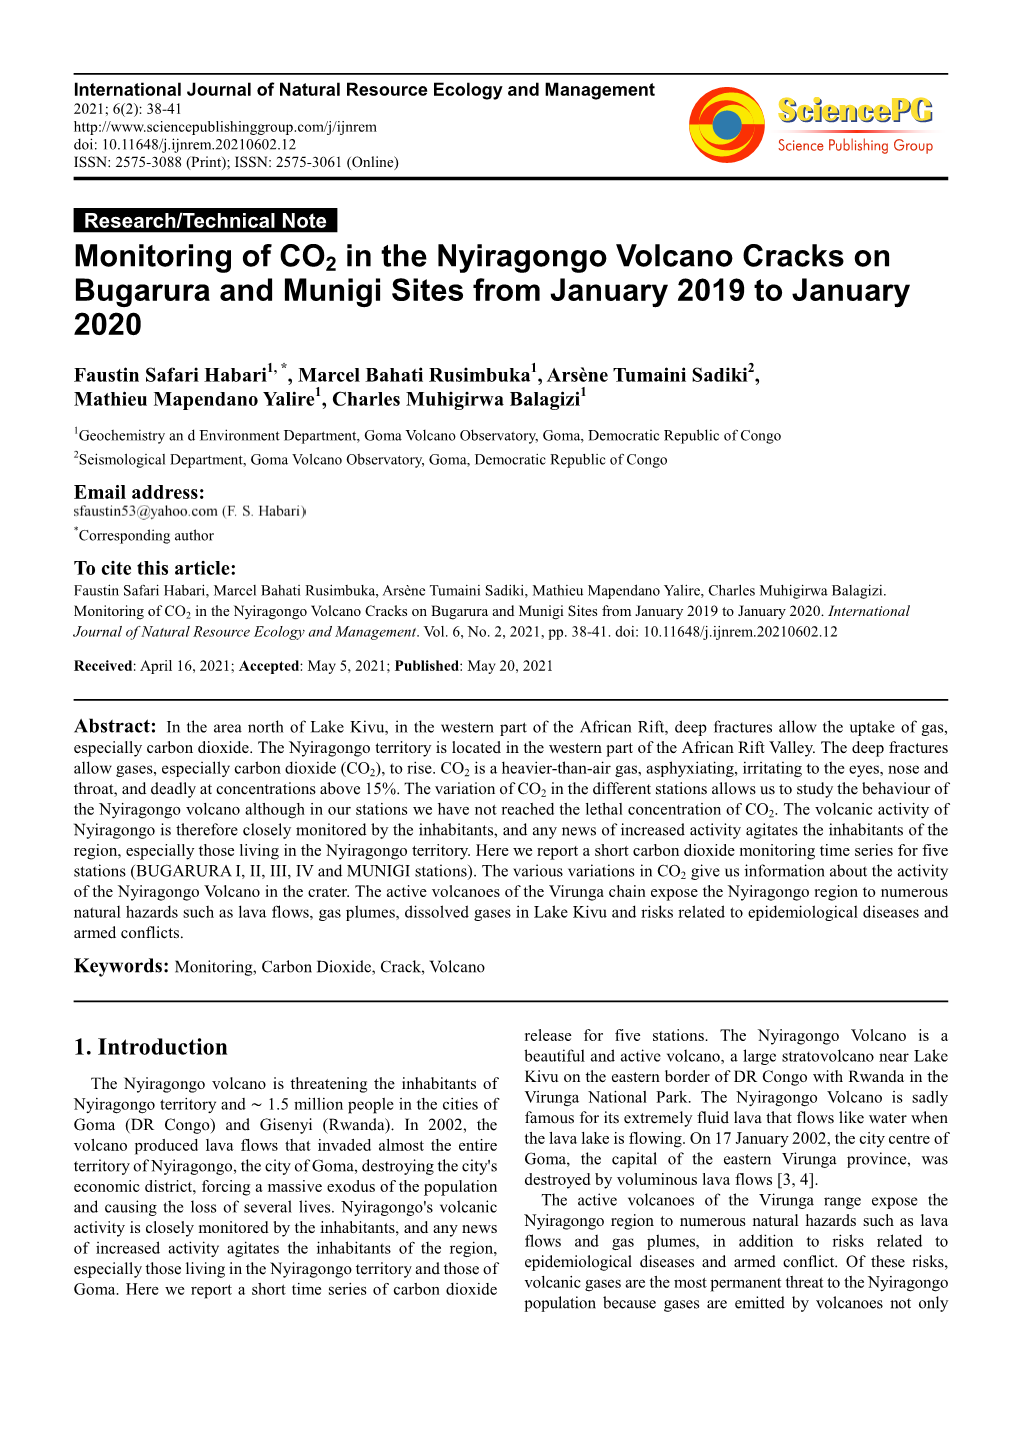 Monitoring of CO2 in the Nyiragongo Volcano Cracks on Bugarura And